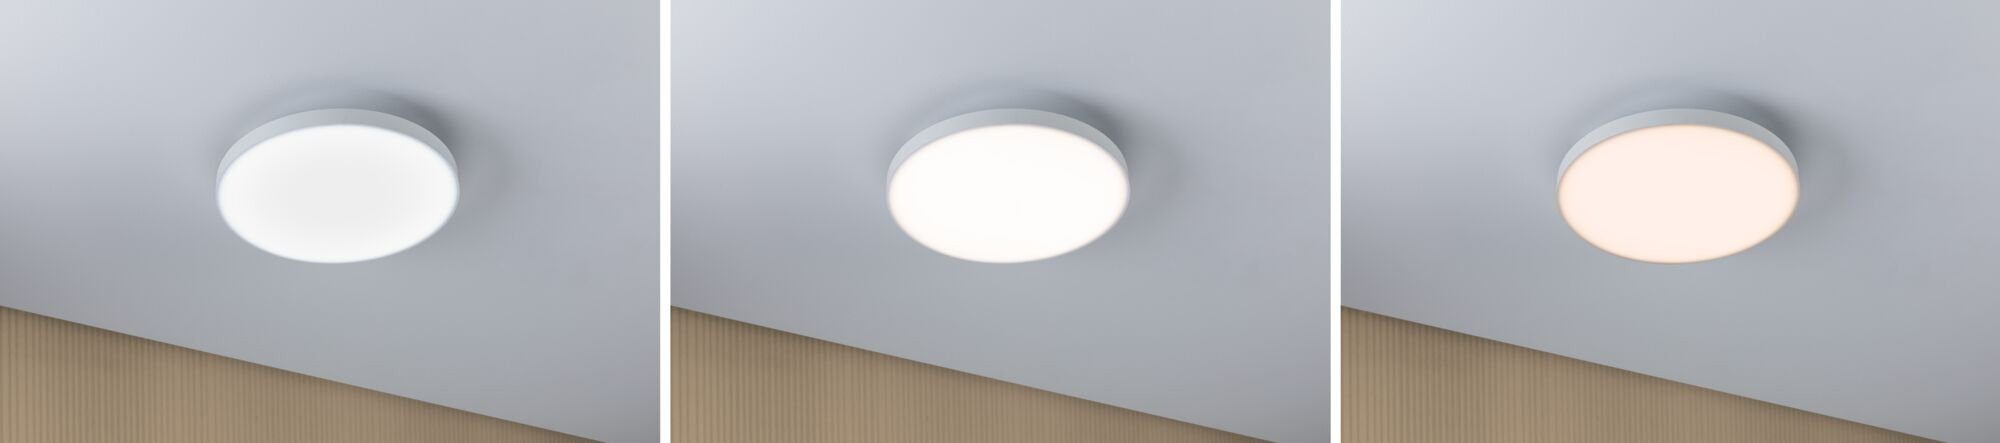 Tageslichtweiß Panel LED Paulmann LED integriert, Velora, fest